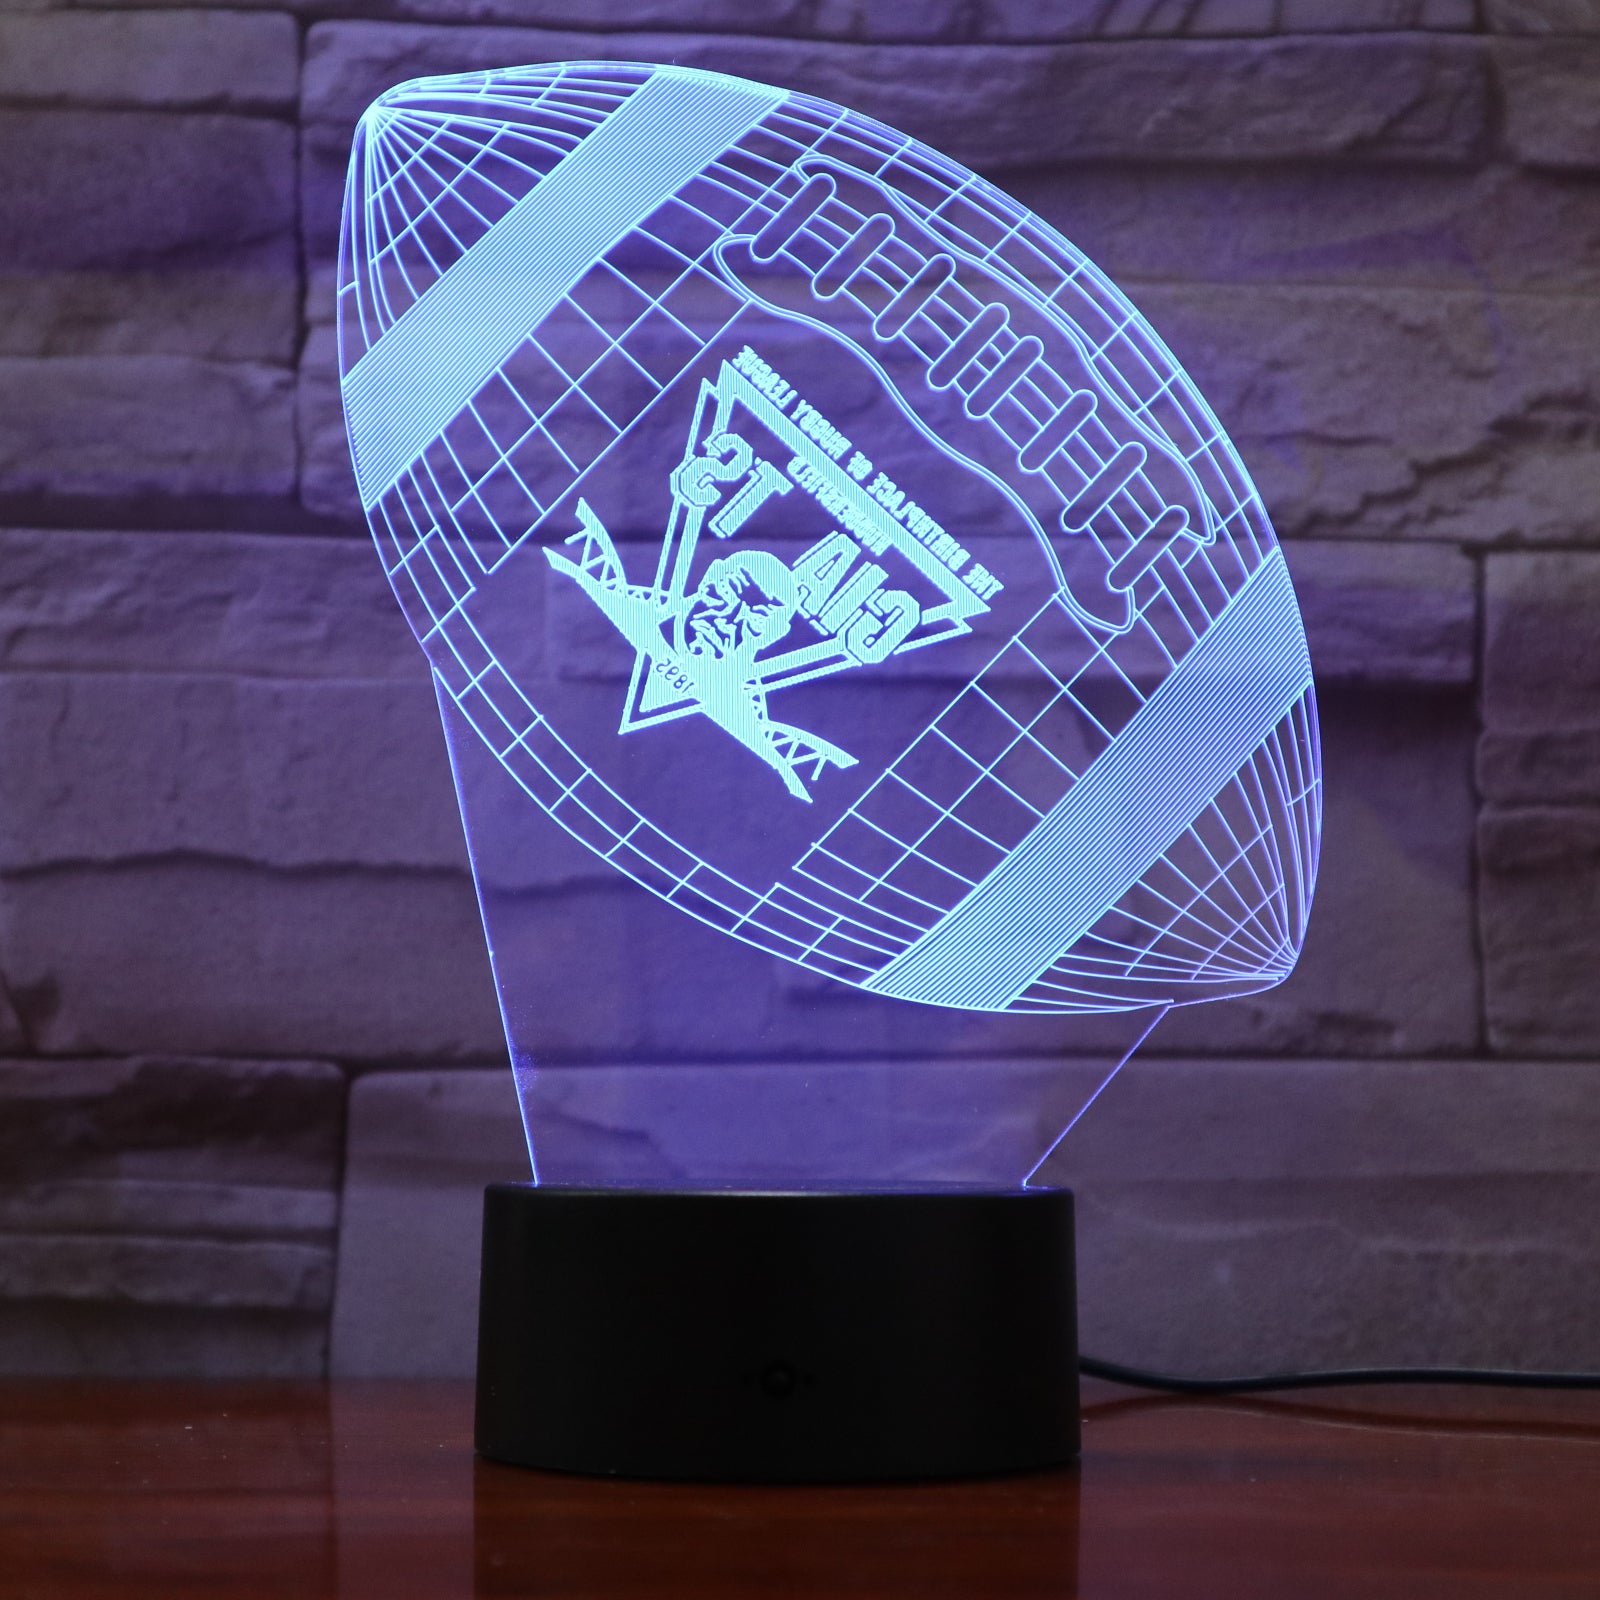 American Football 8 - 3D Optical Illusion LED Lamp Hologram